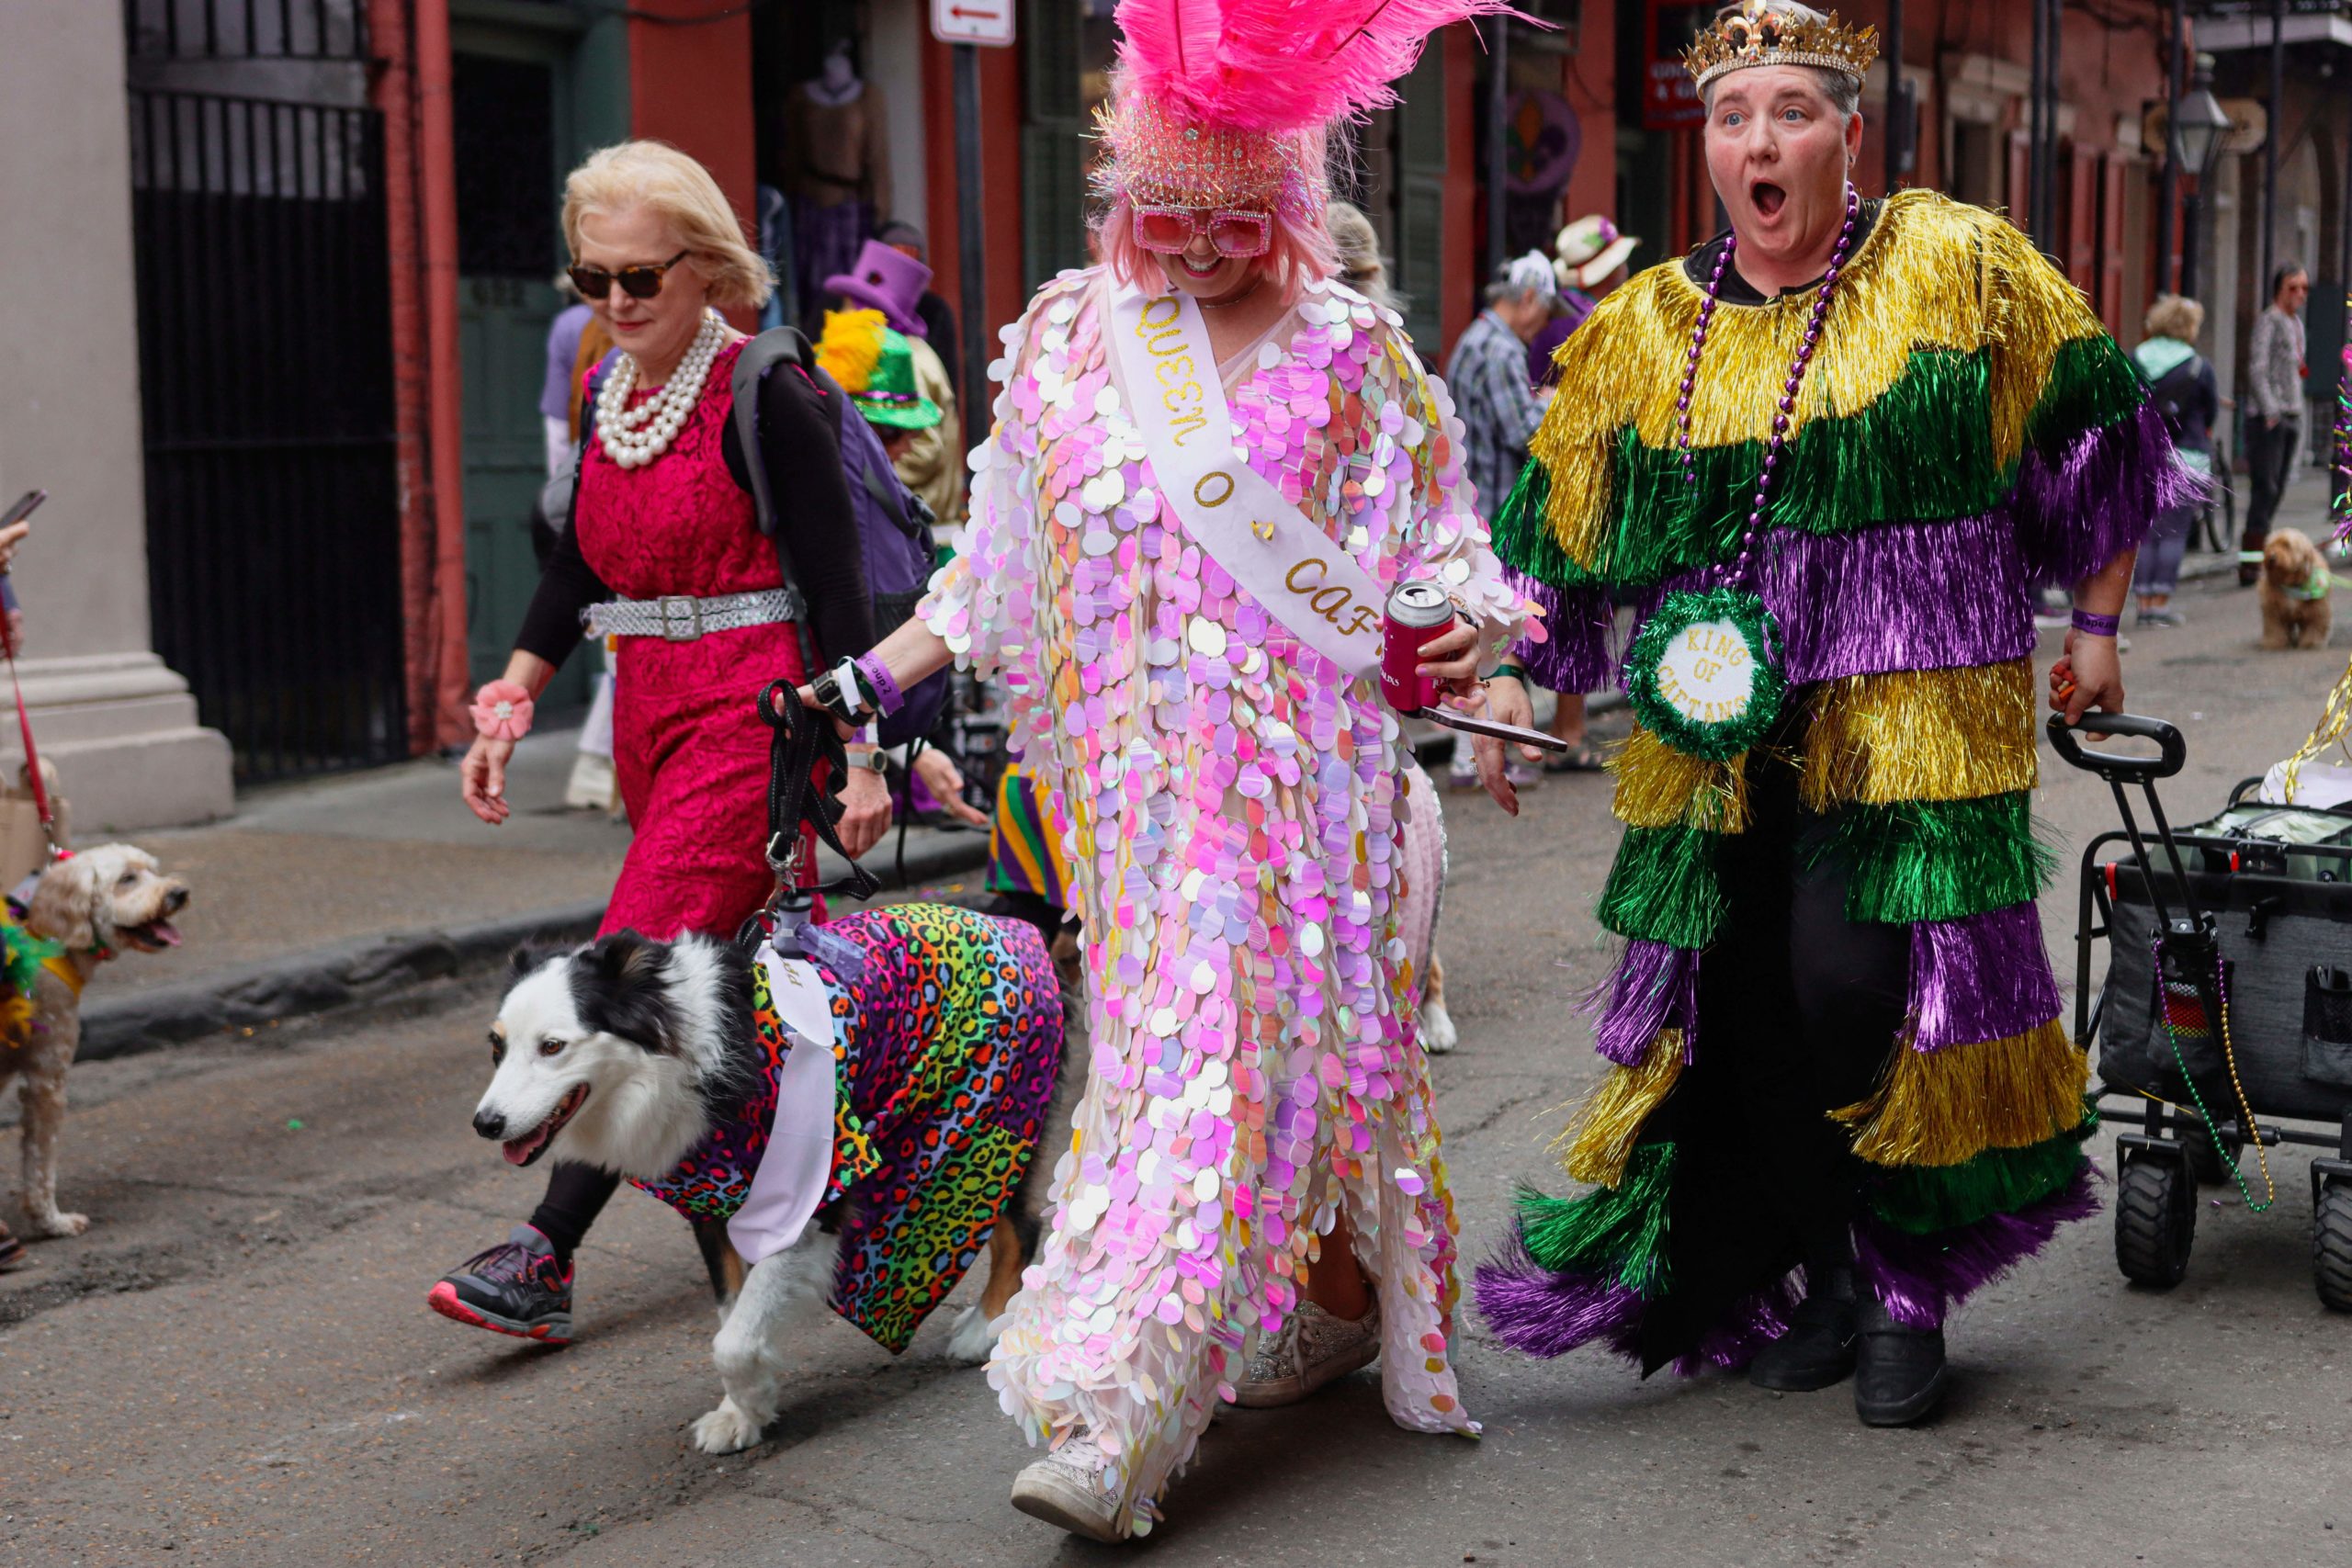 Costumed Mardi Gras revelers